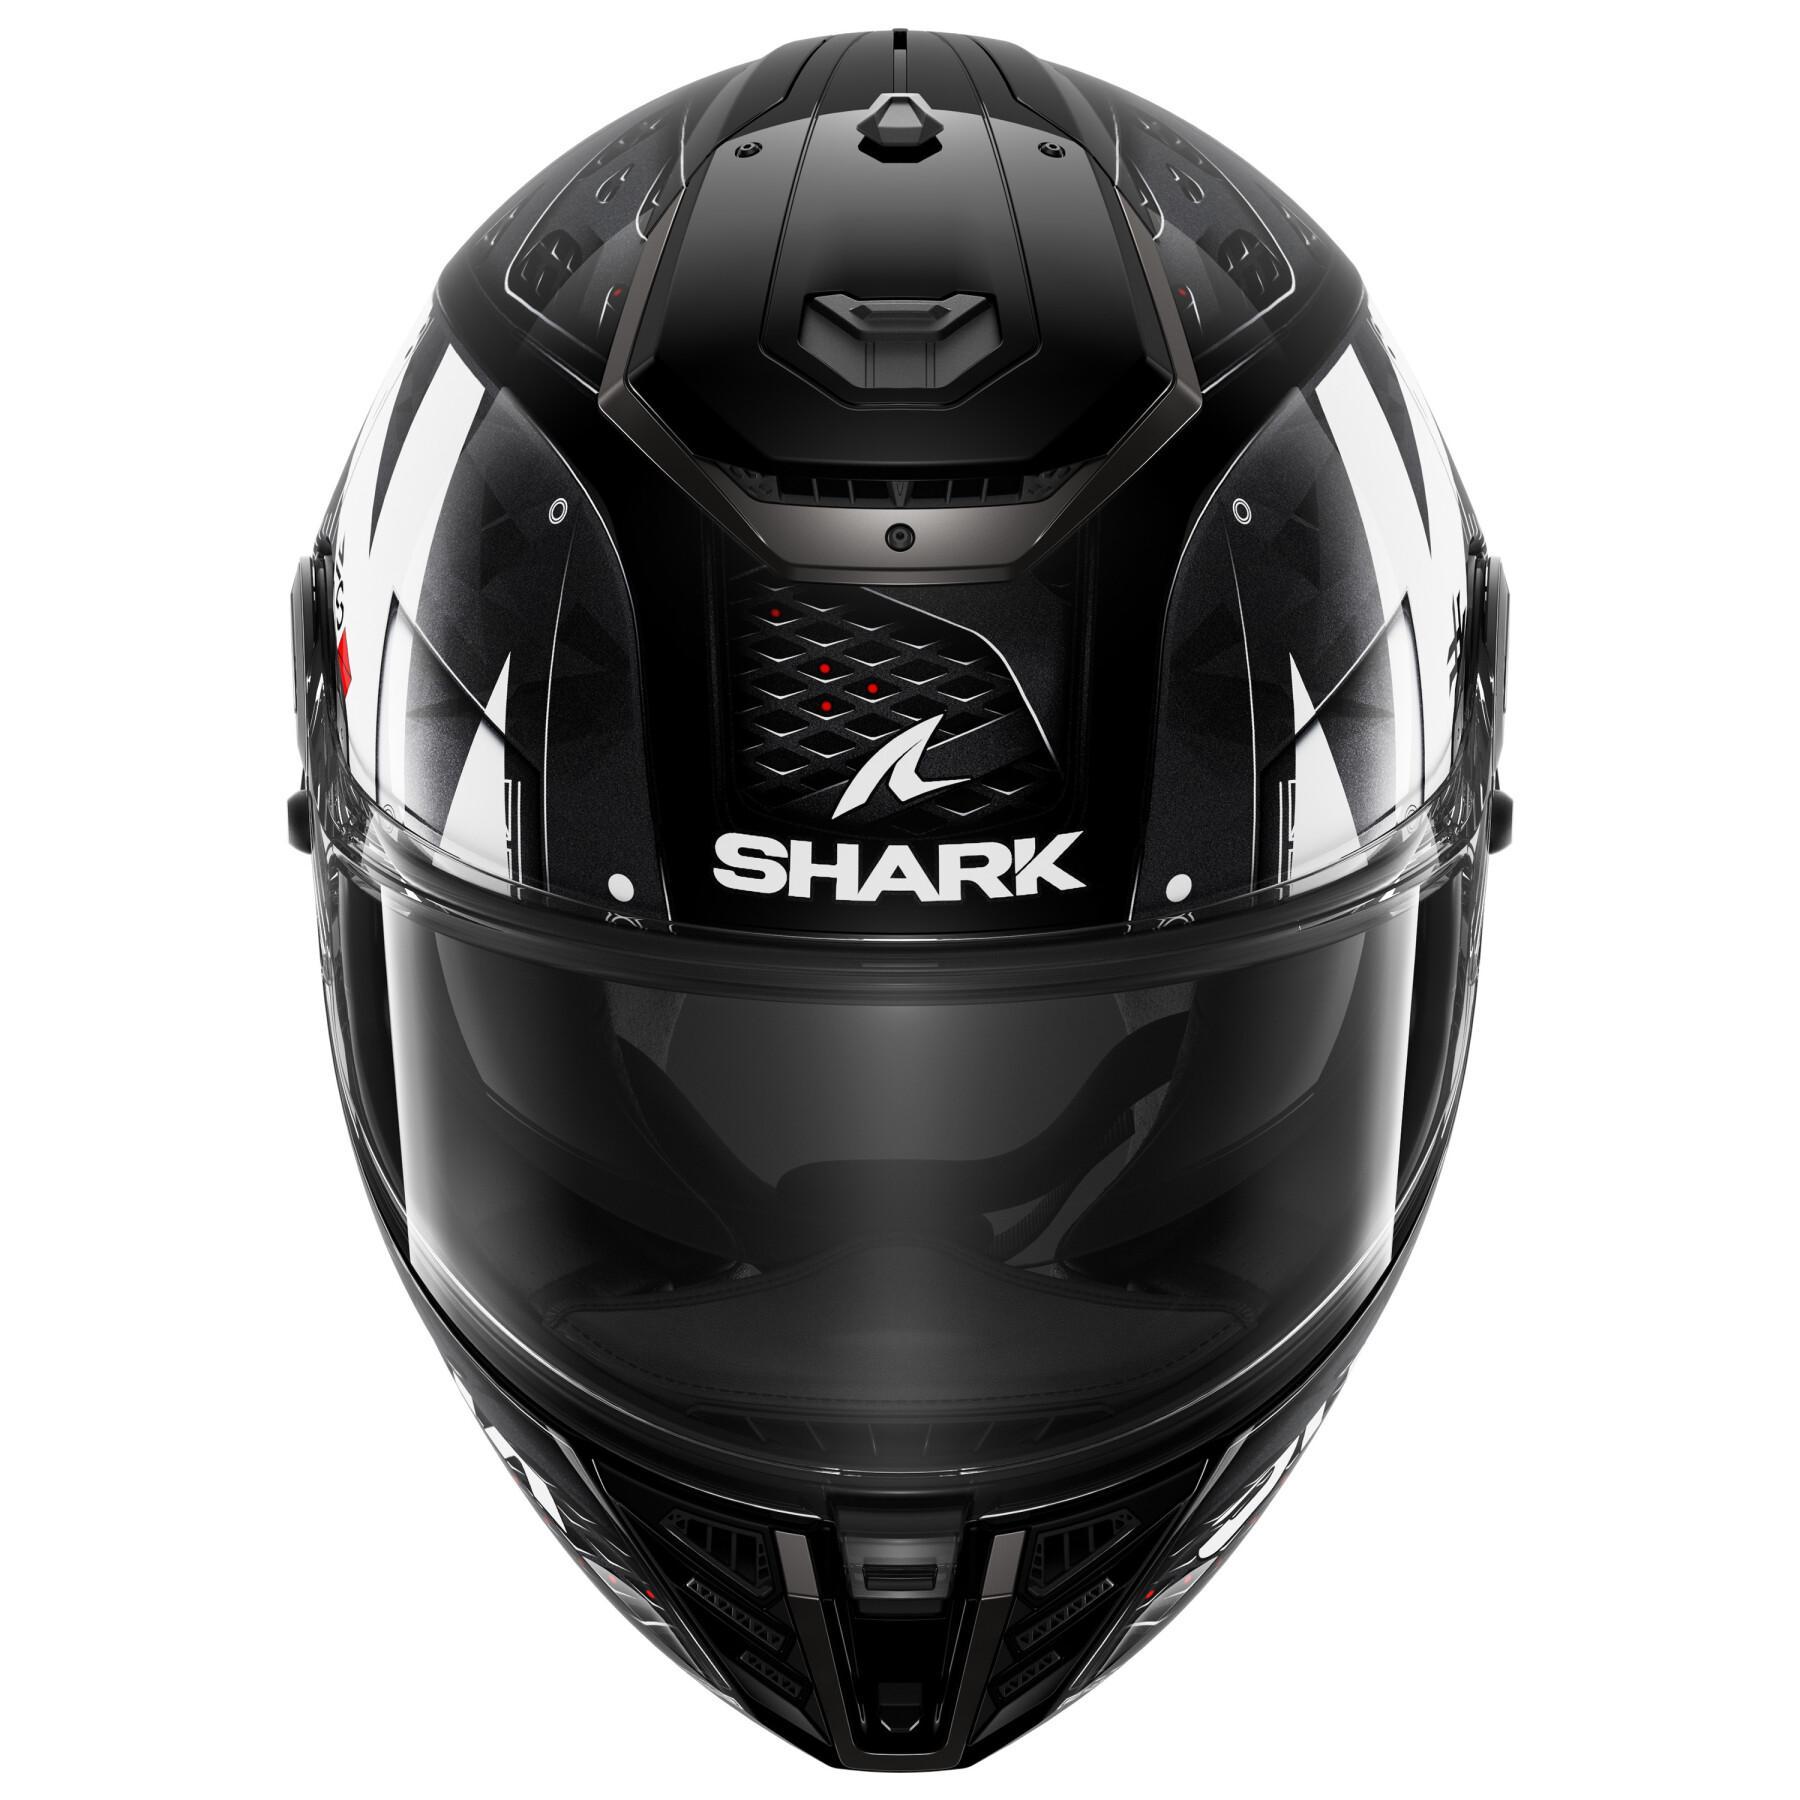 Casque moto intégral Shark Spartan Rs Byrhon